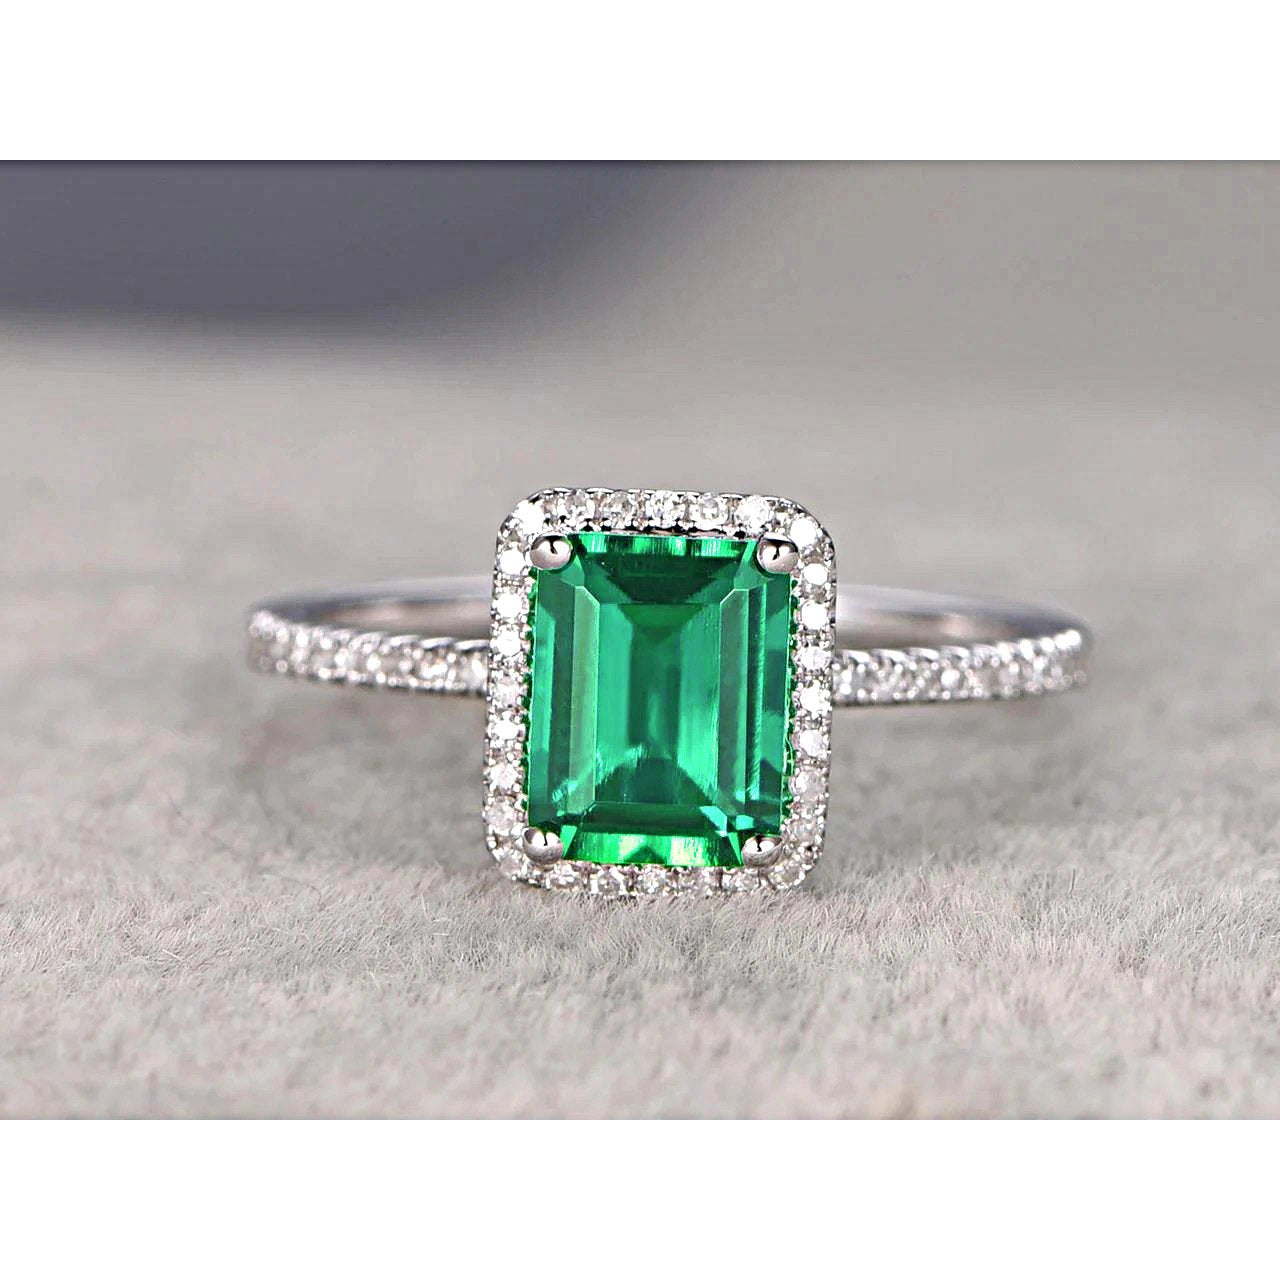 Green Emerald With Round Cut Diamond Ring 3.50 Carat White Gold 14K